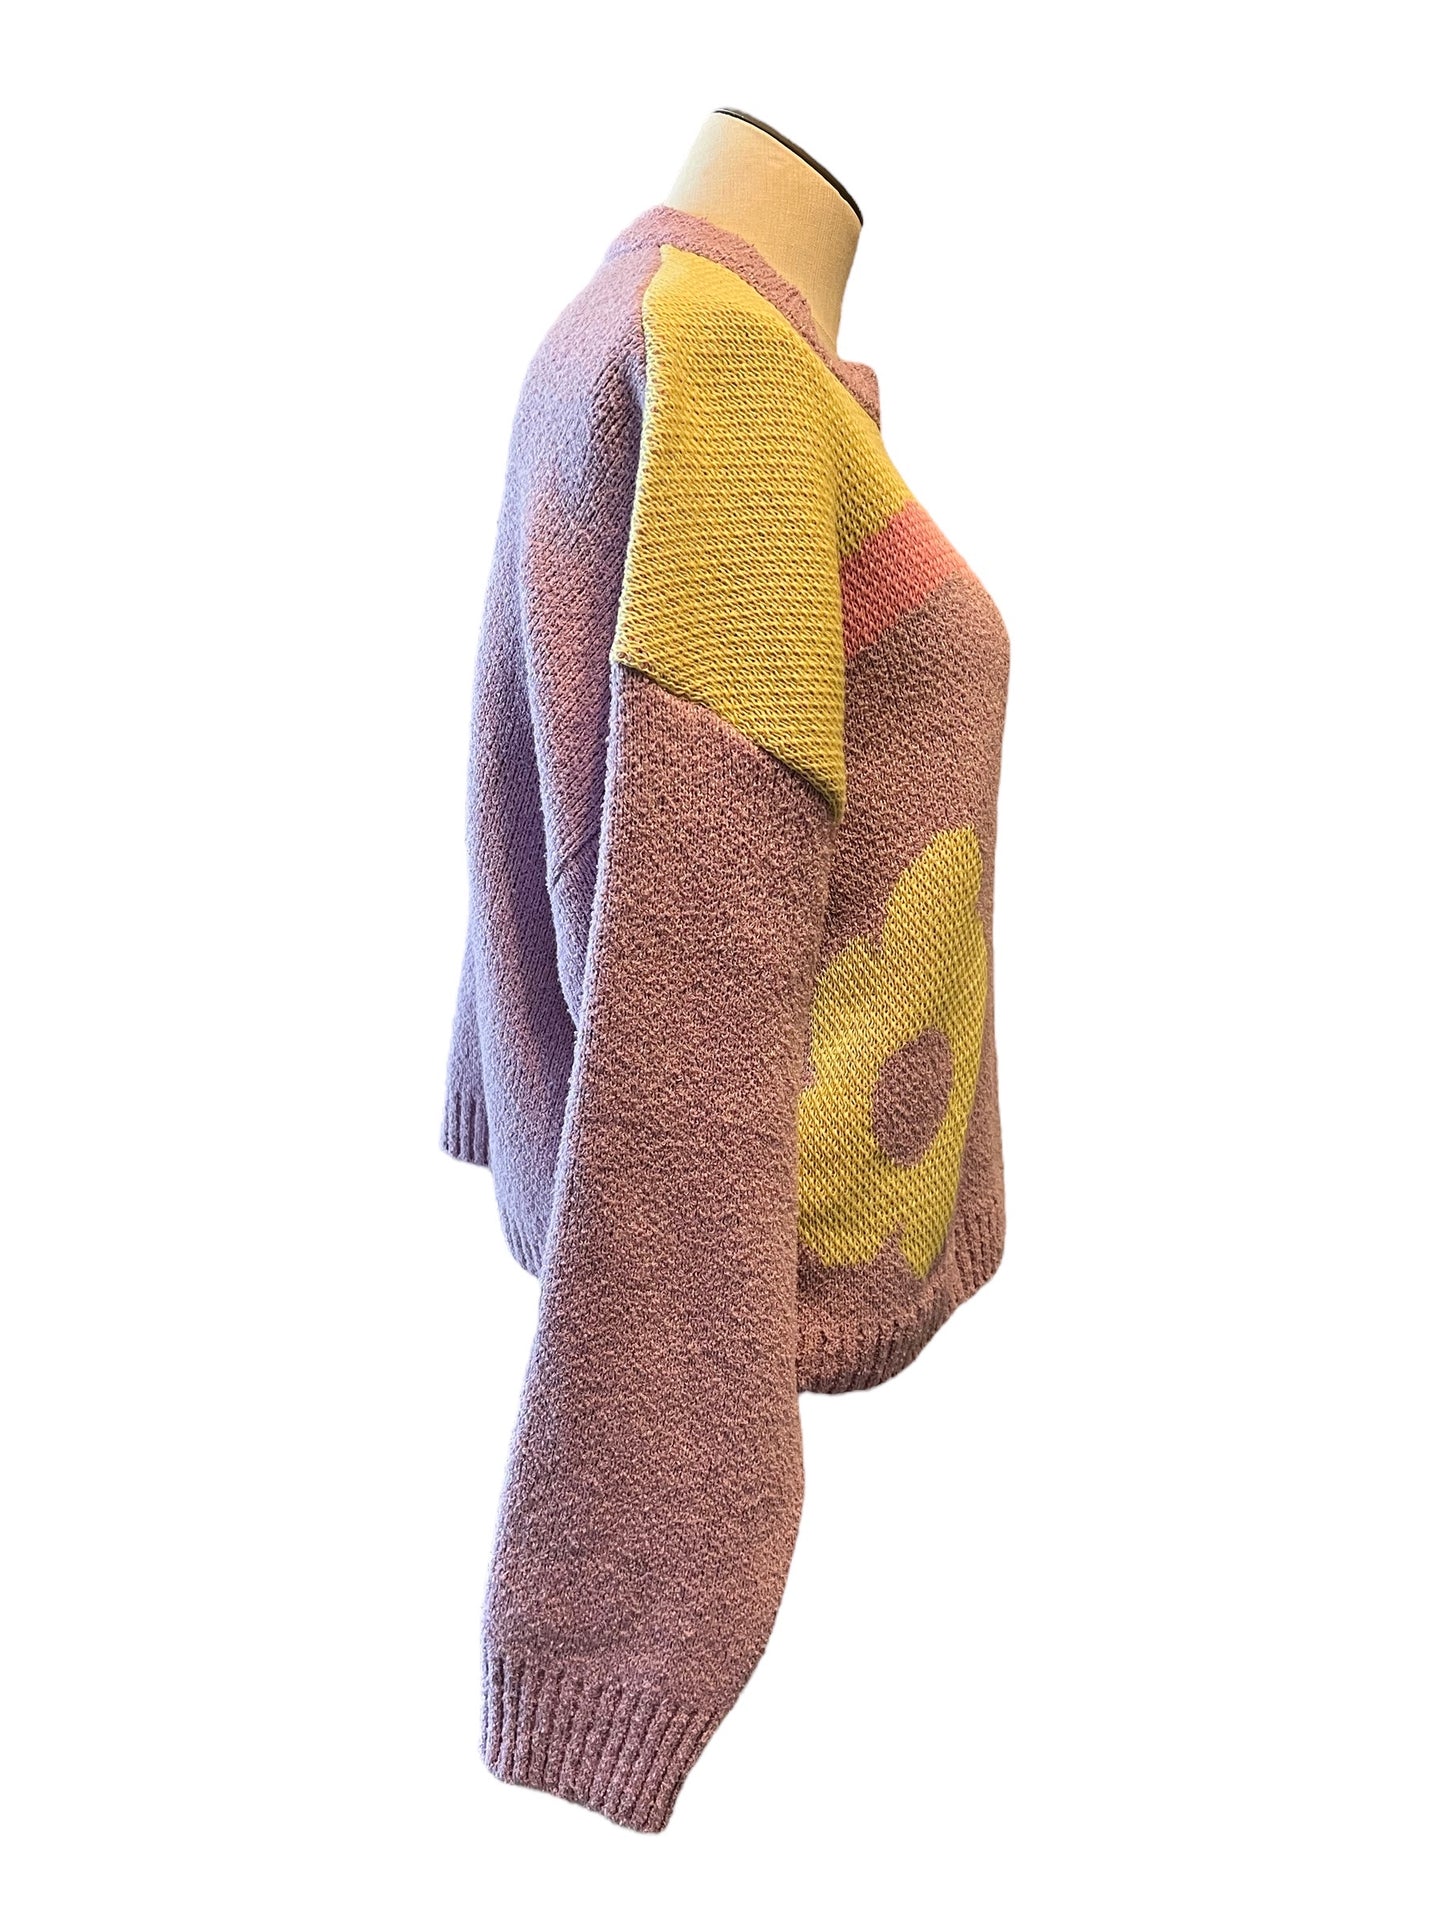 Zara Size M Retro Purple & Yellow Flower Sweater